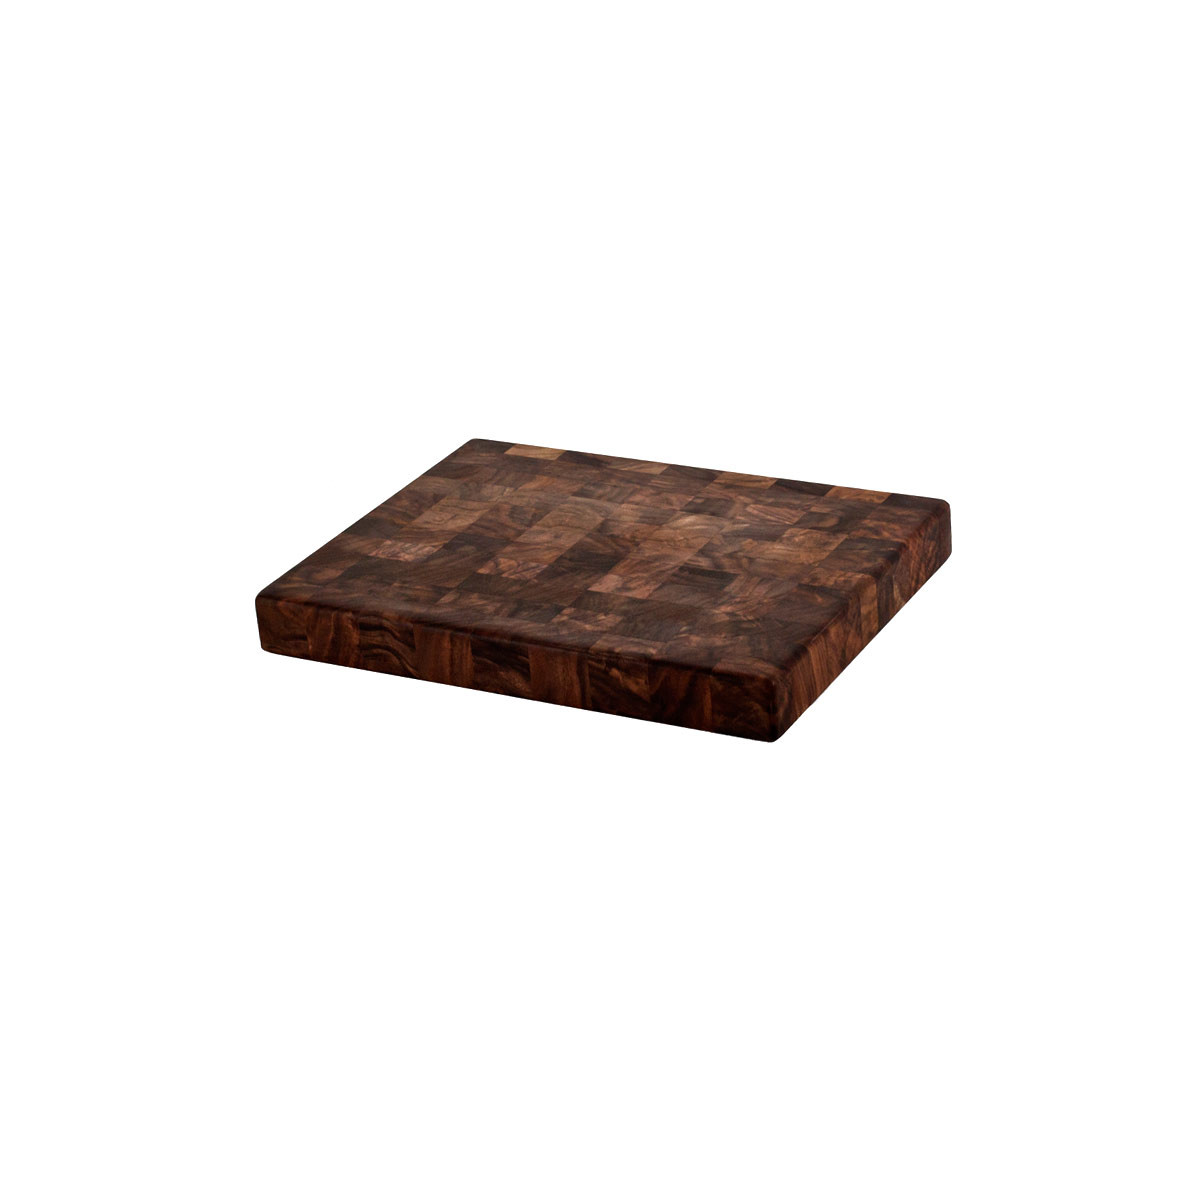 John Boos Edge-Grain Walnut Square Cutting Board with Feet 9 x 9